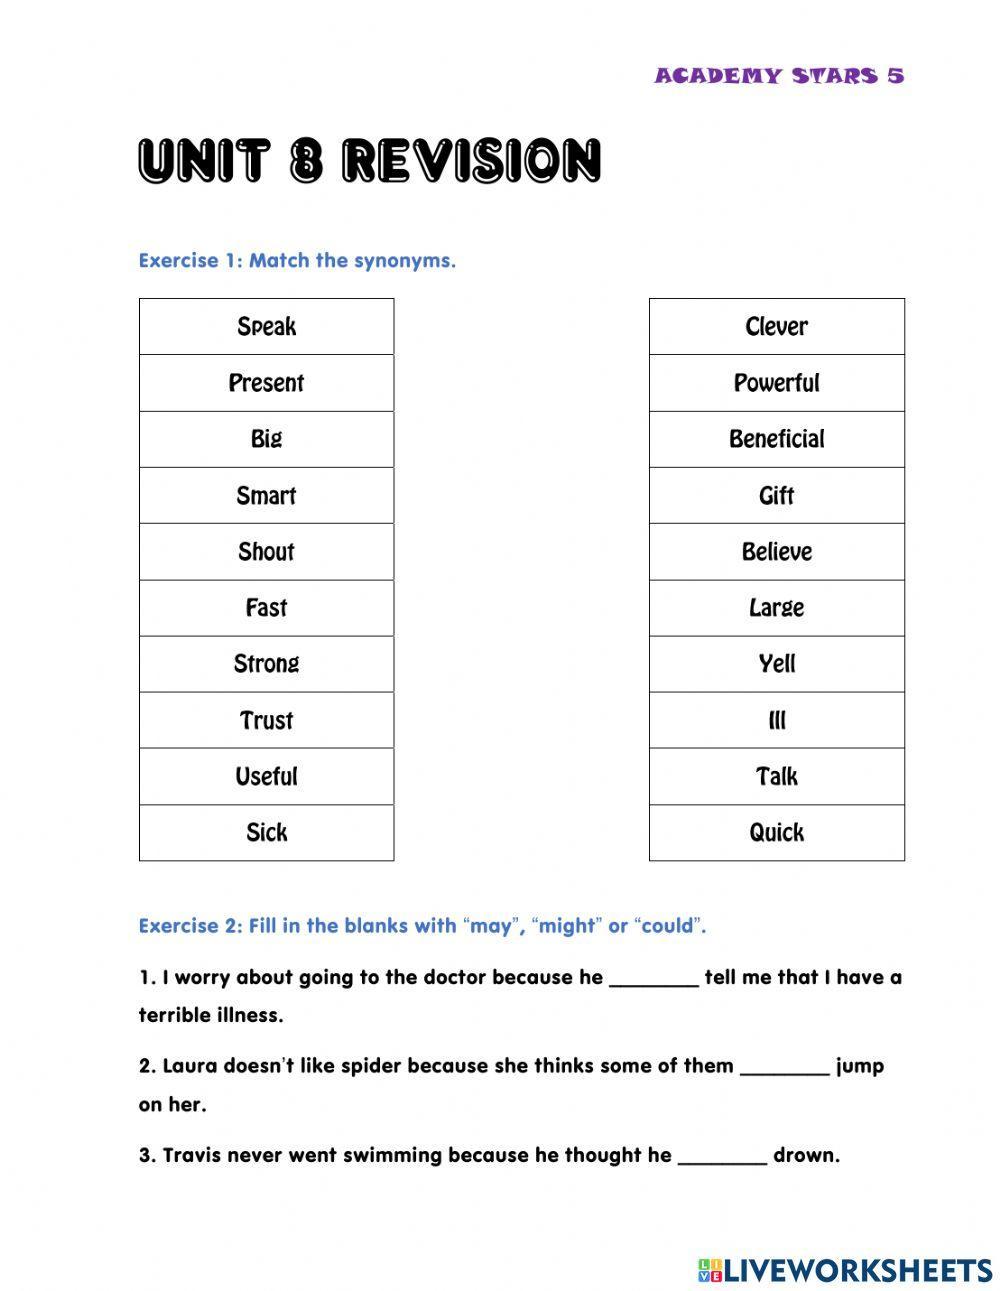 Unit 8: revision - academy stars 5